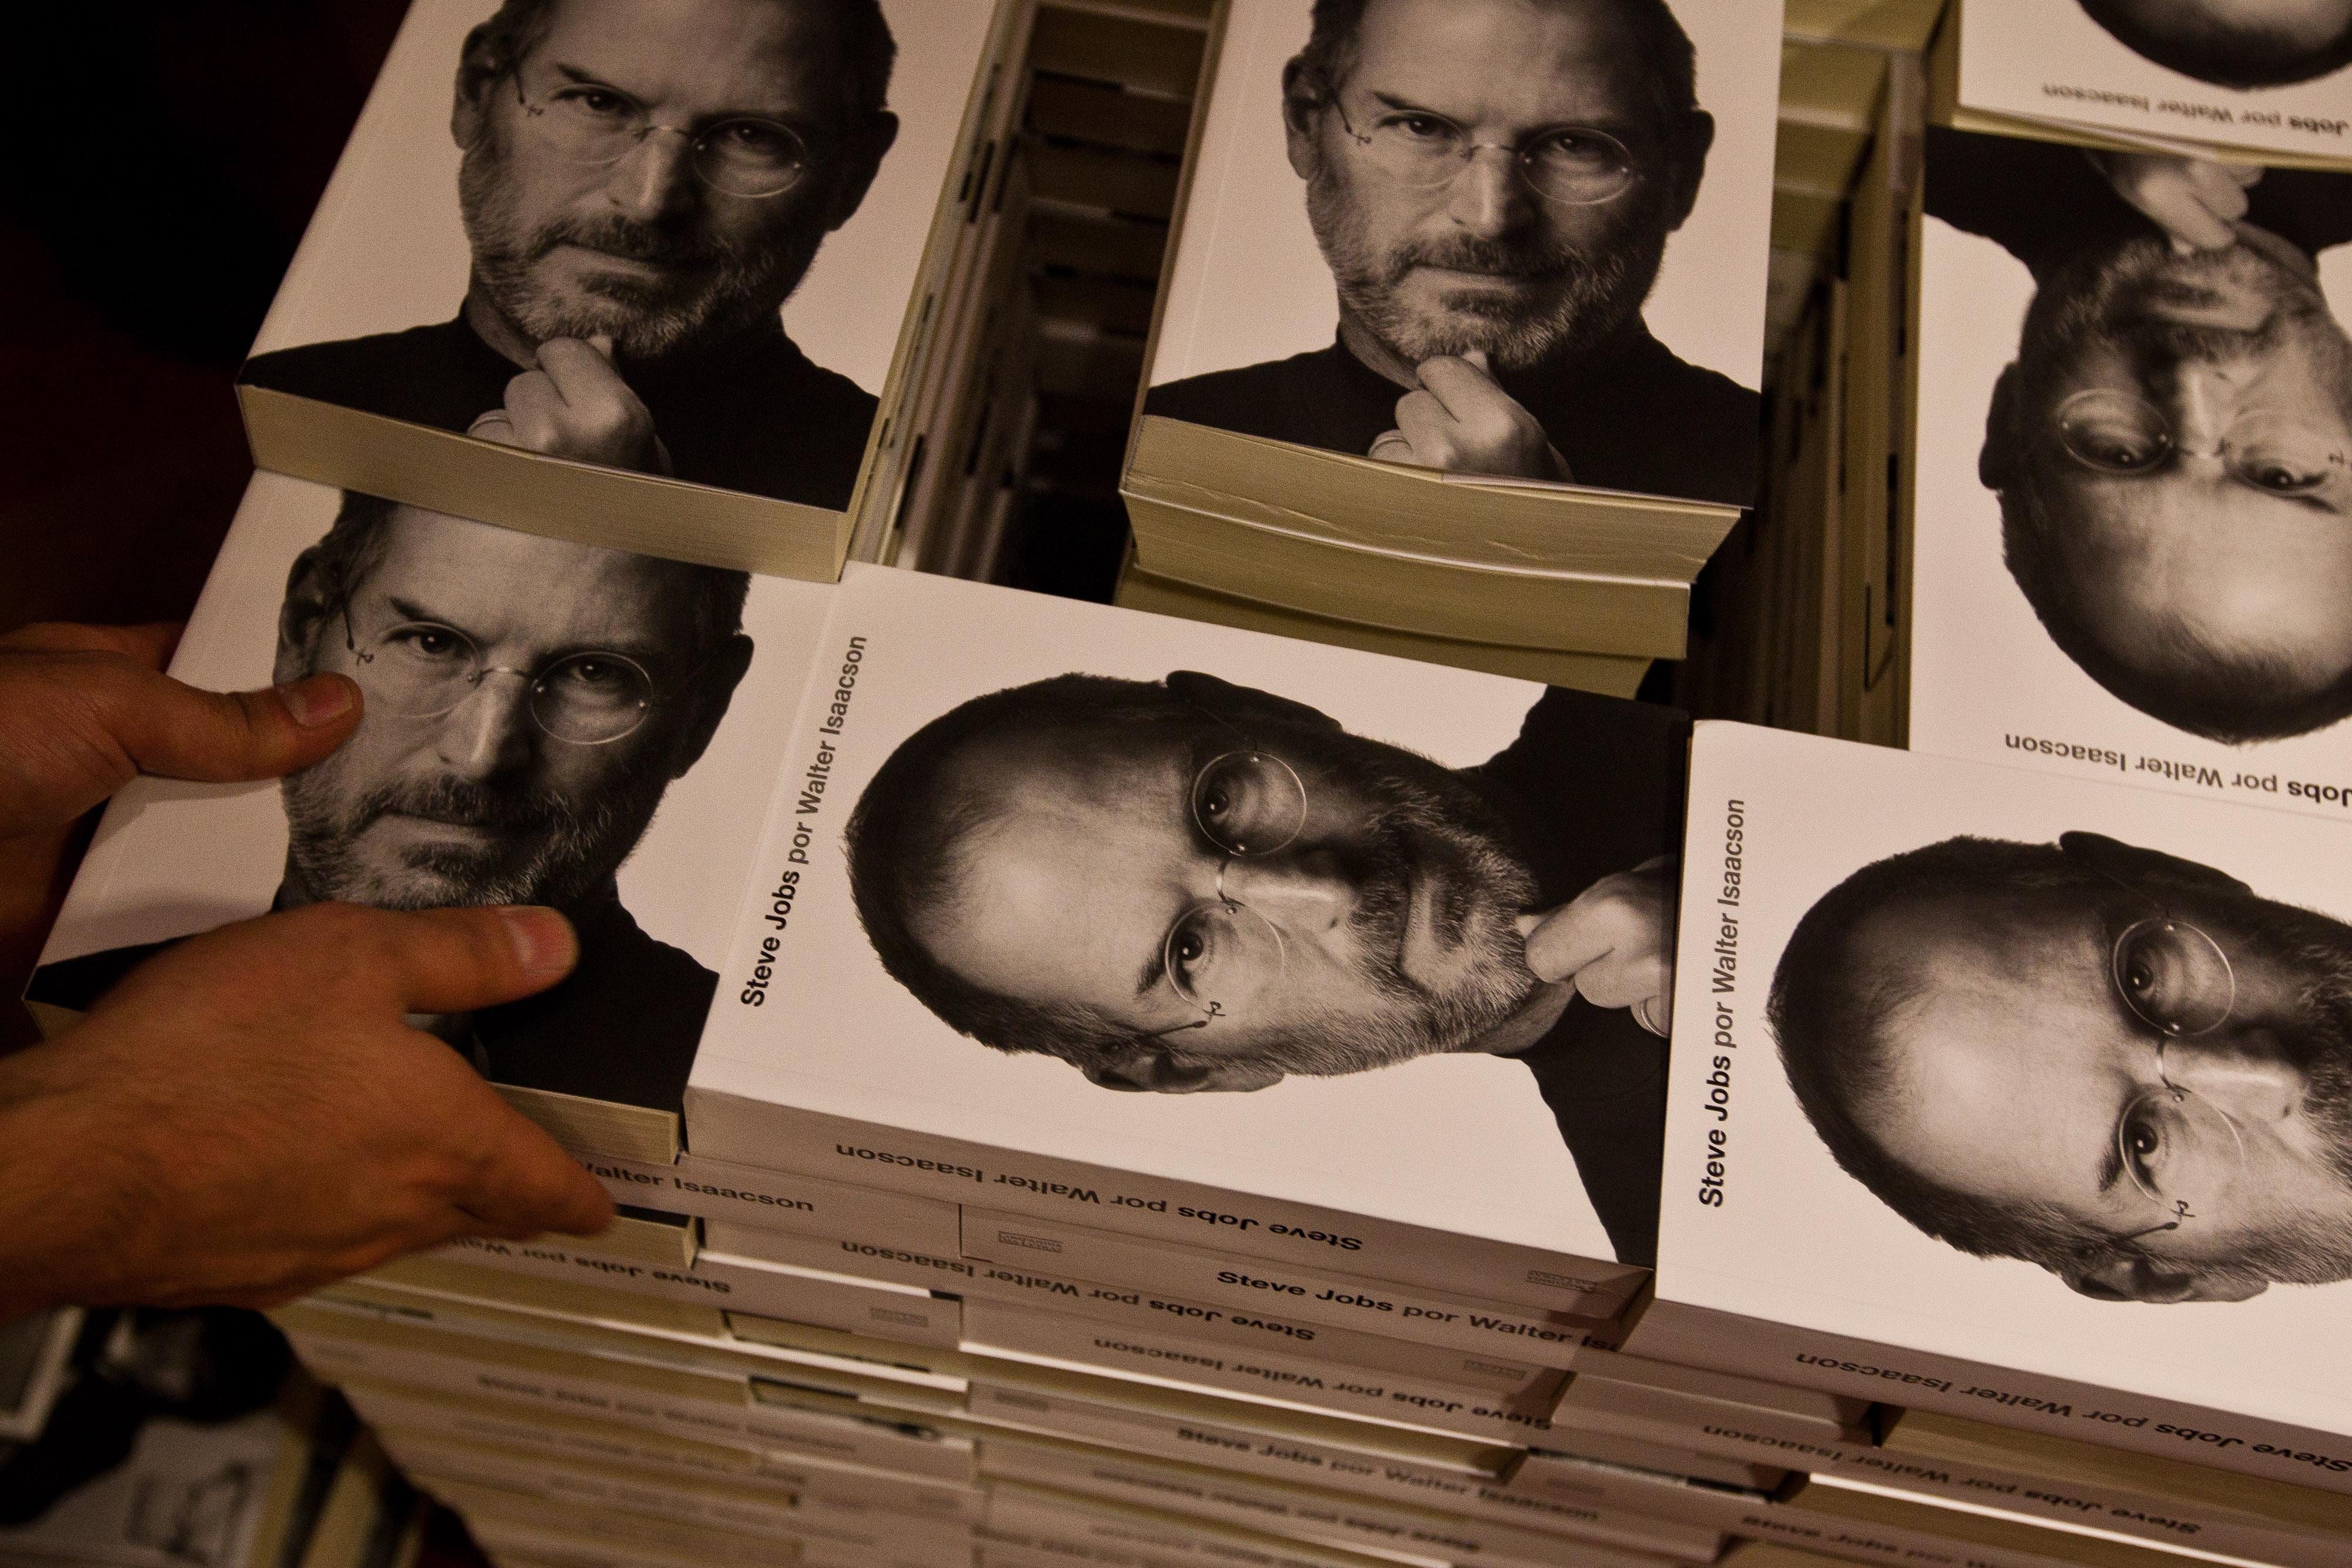 Copies of a Steve Jobs biography